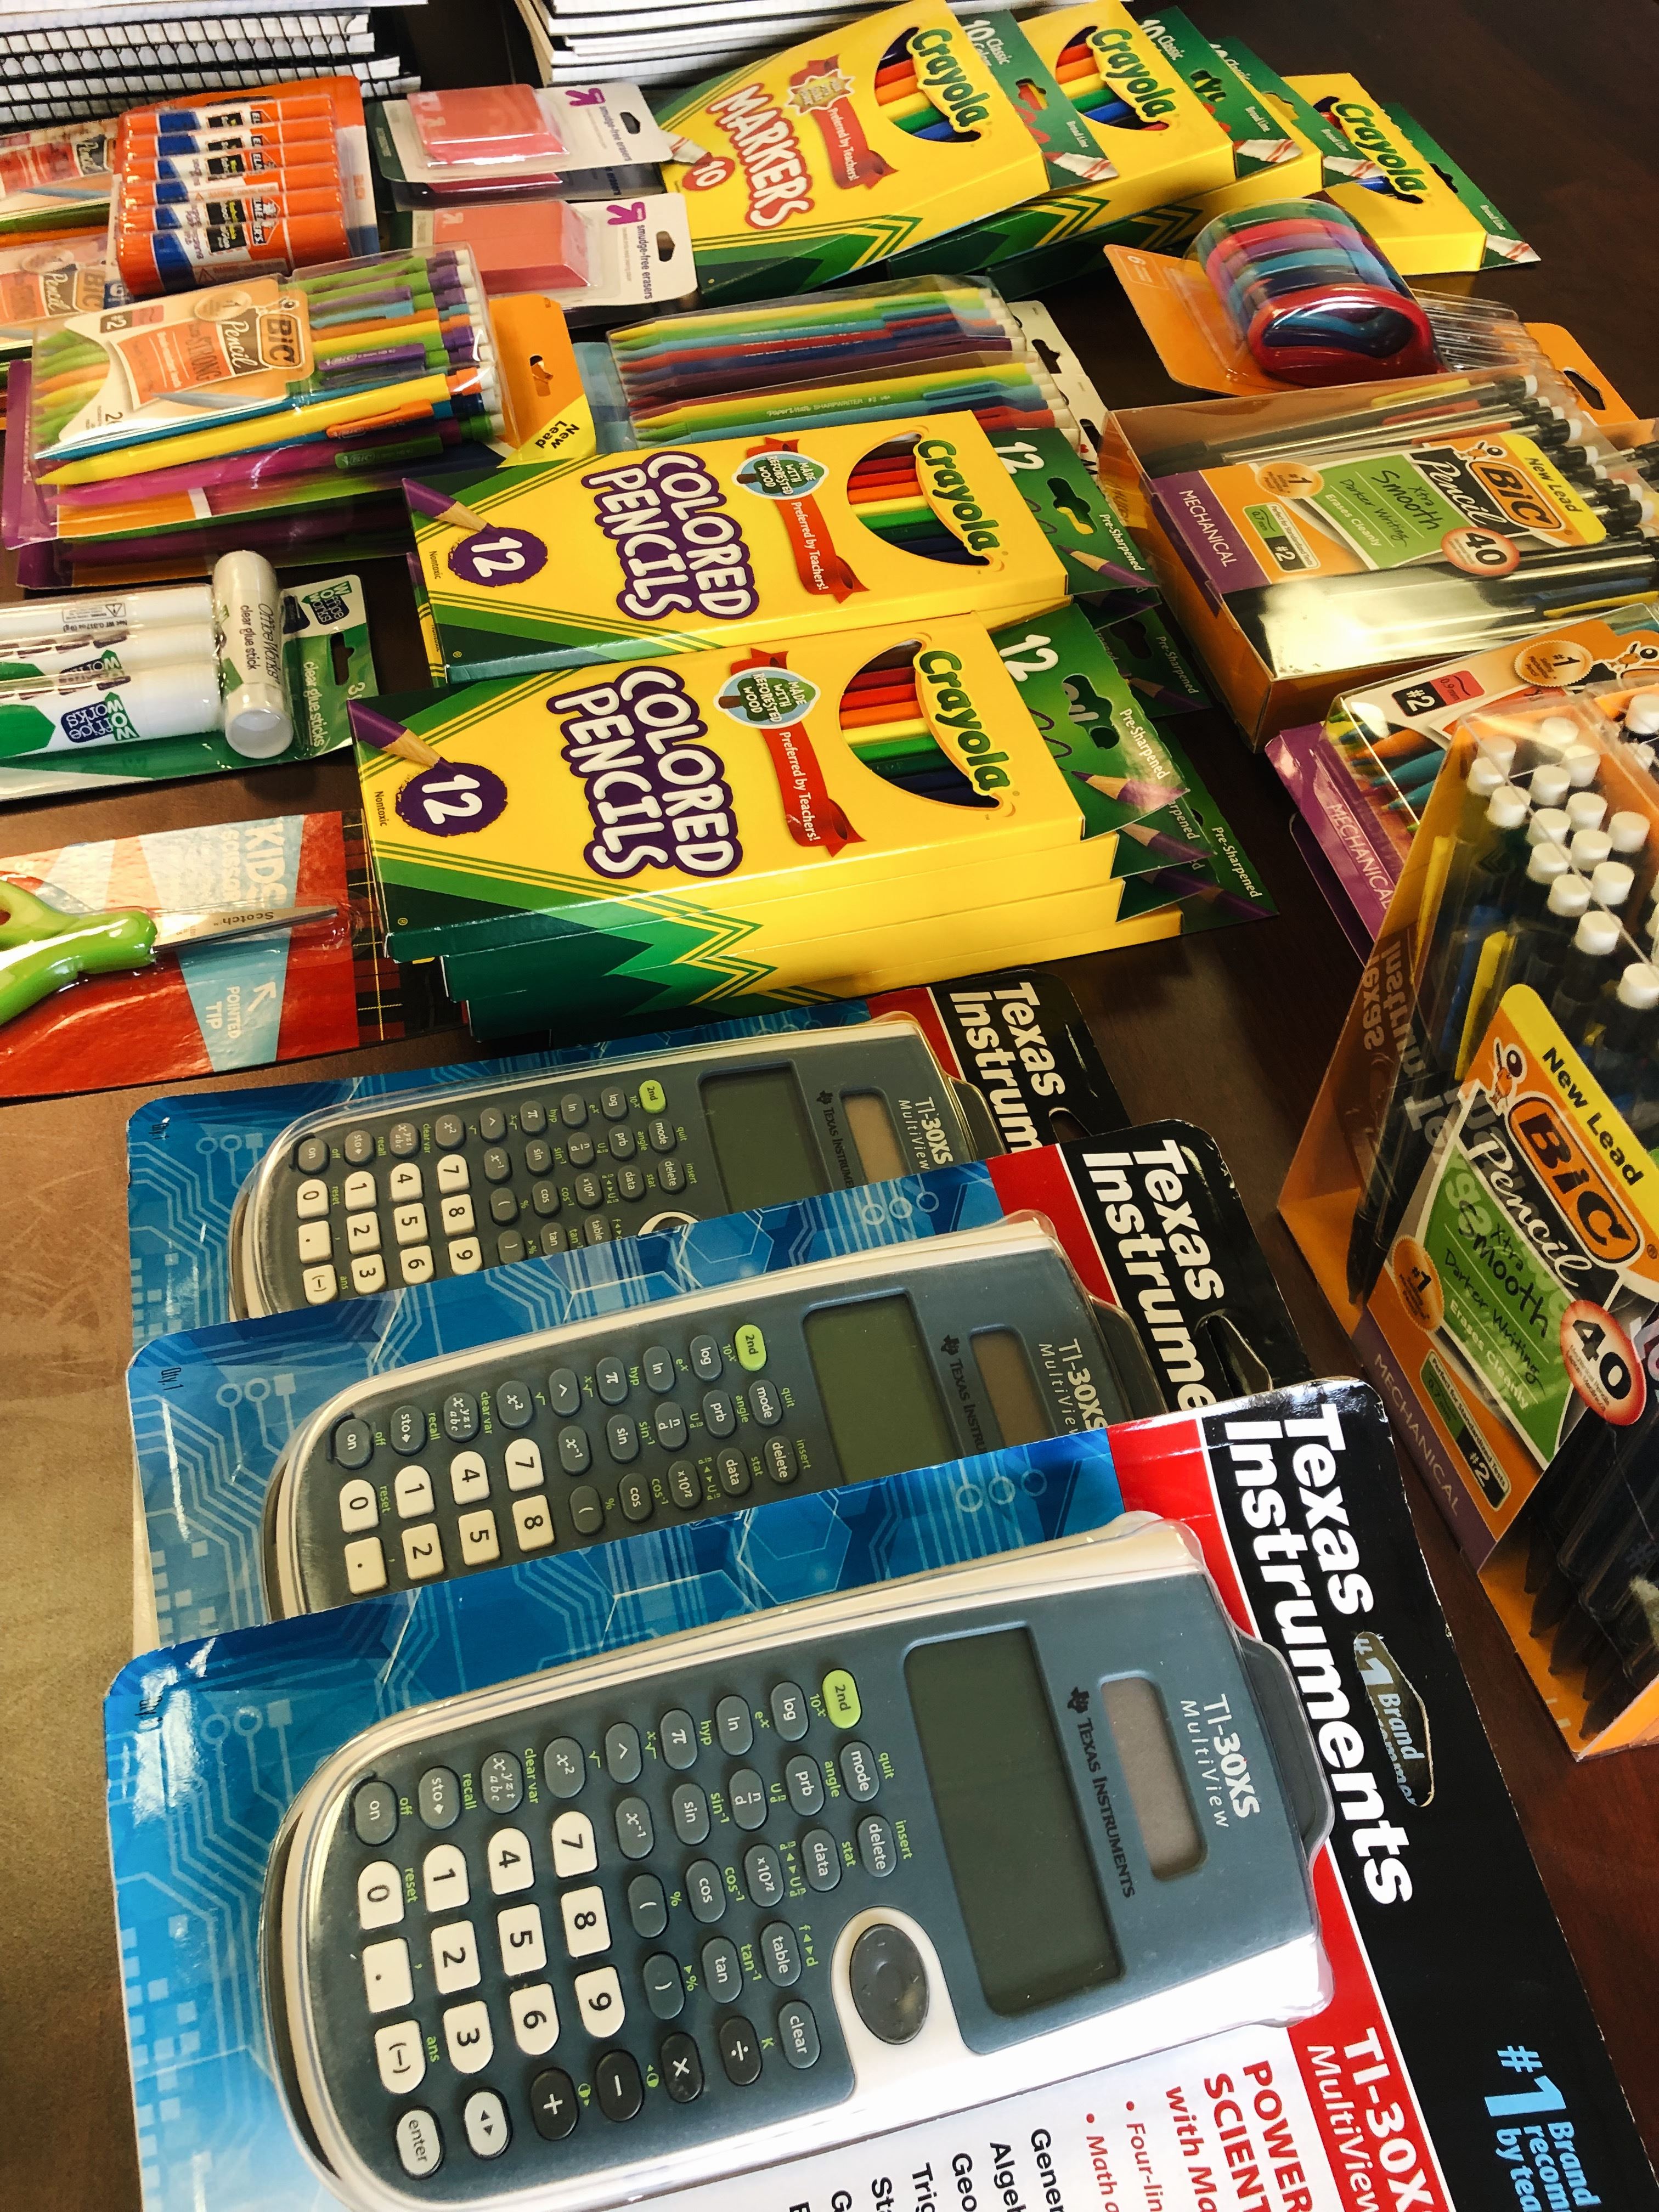 Close up picture of more school supplies: markers, erasers, glue sticks, notebooks, pencils, pens, calculators, etc.